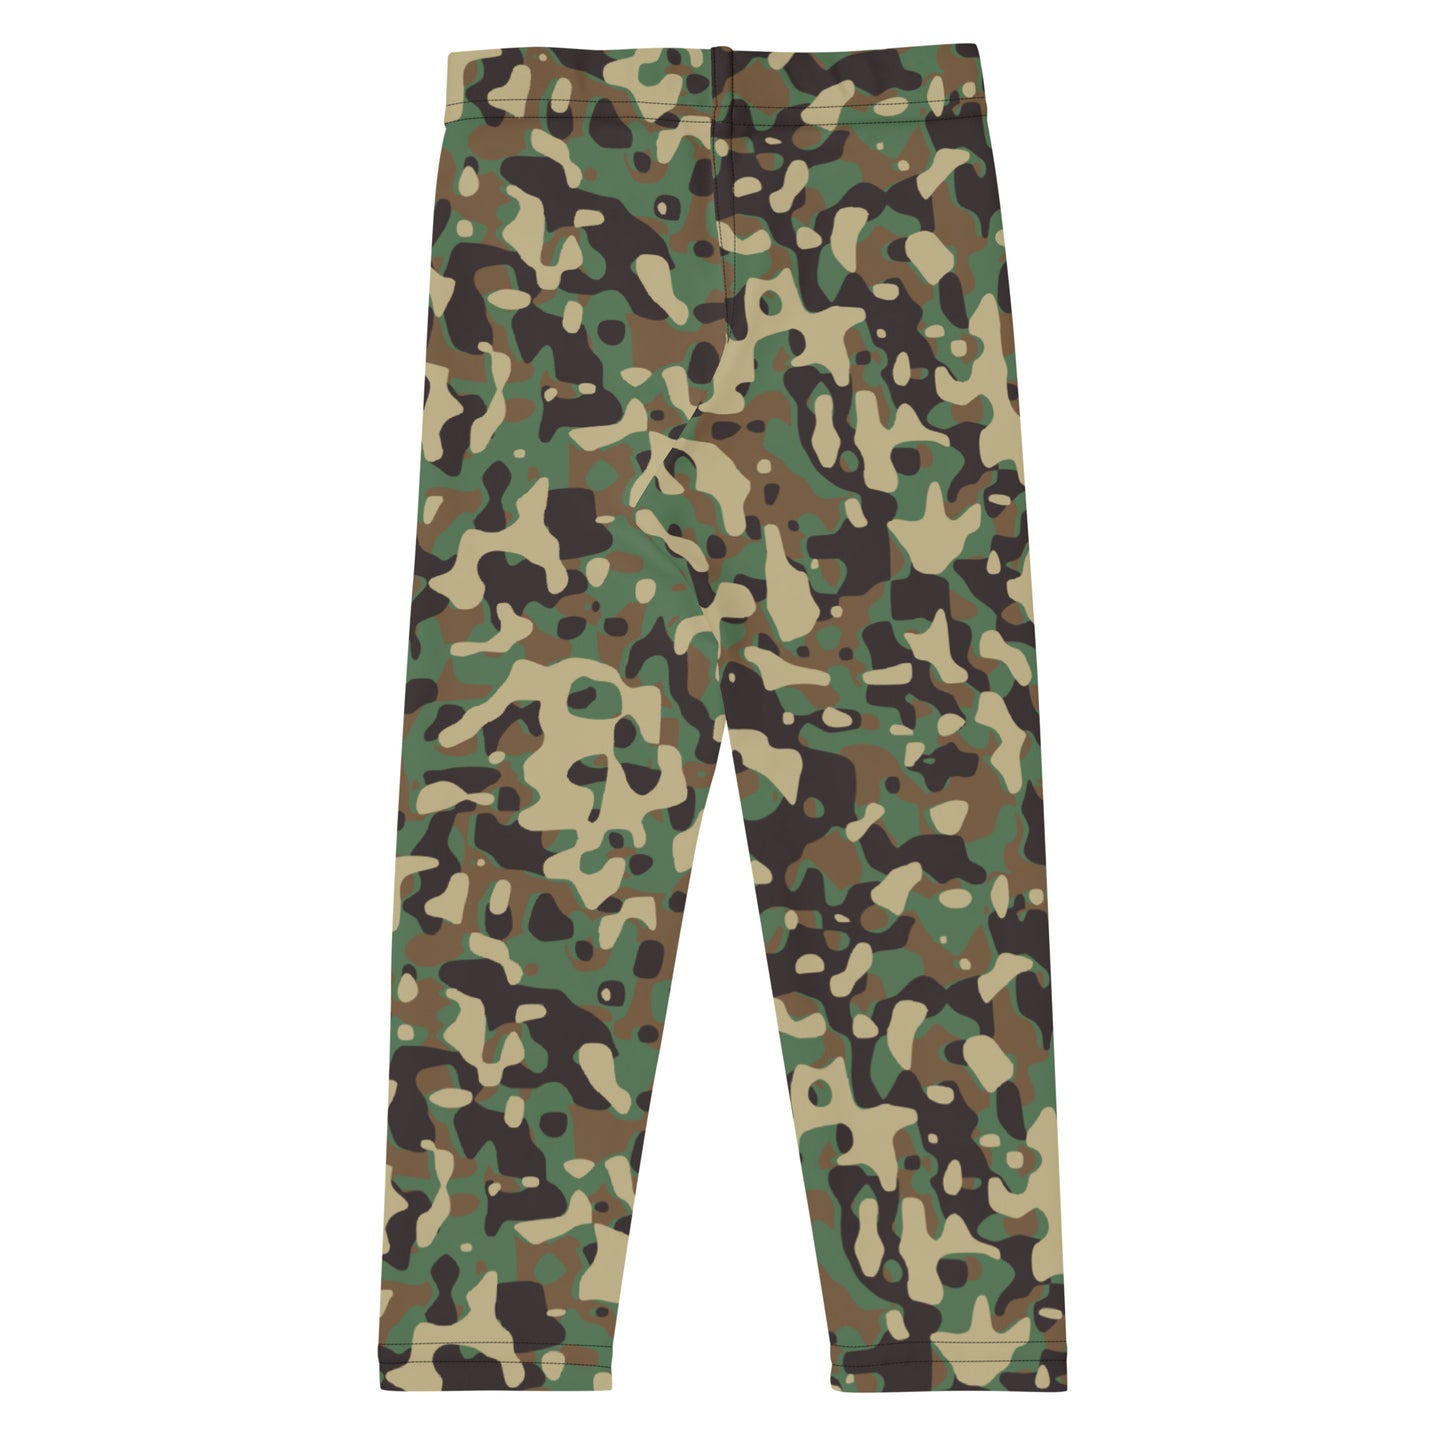 Kid's Leggings - Green & Tan Camouflage